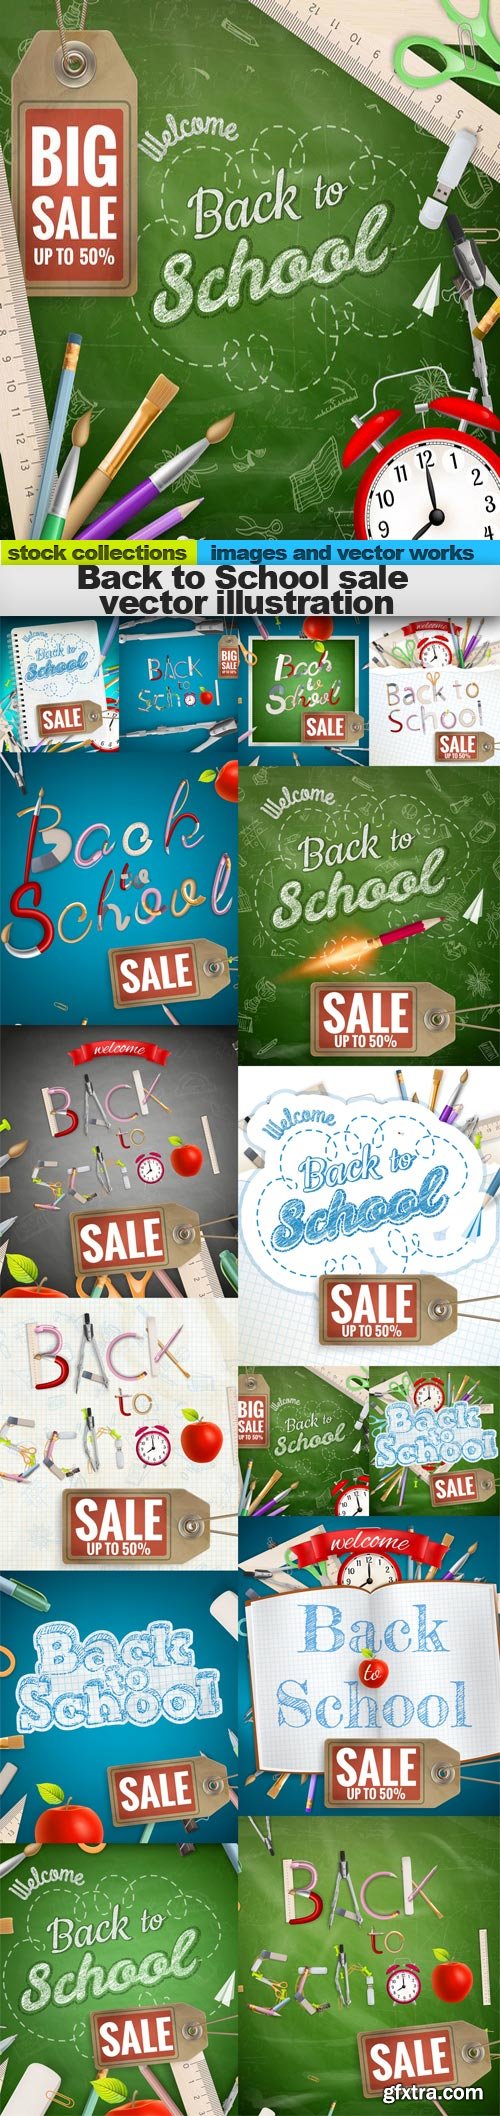 Back to School sale vector illustration, 15 x EPS